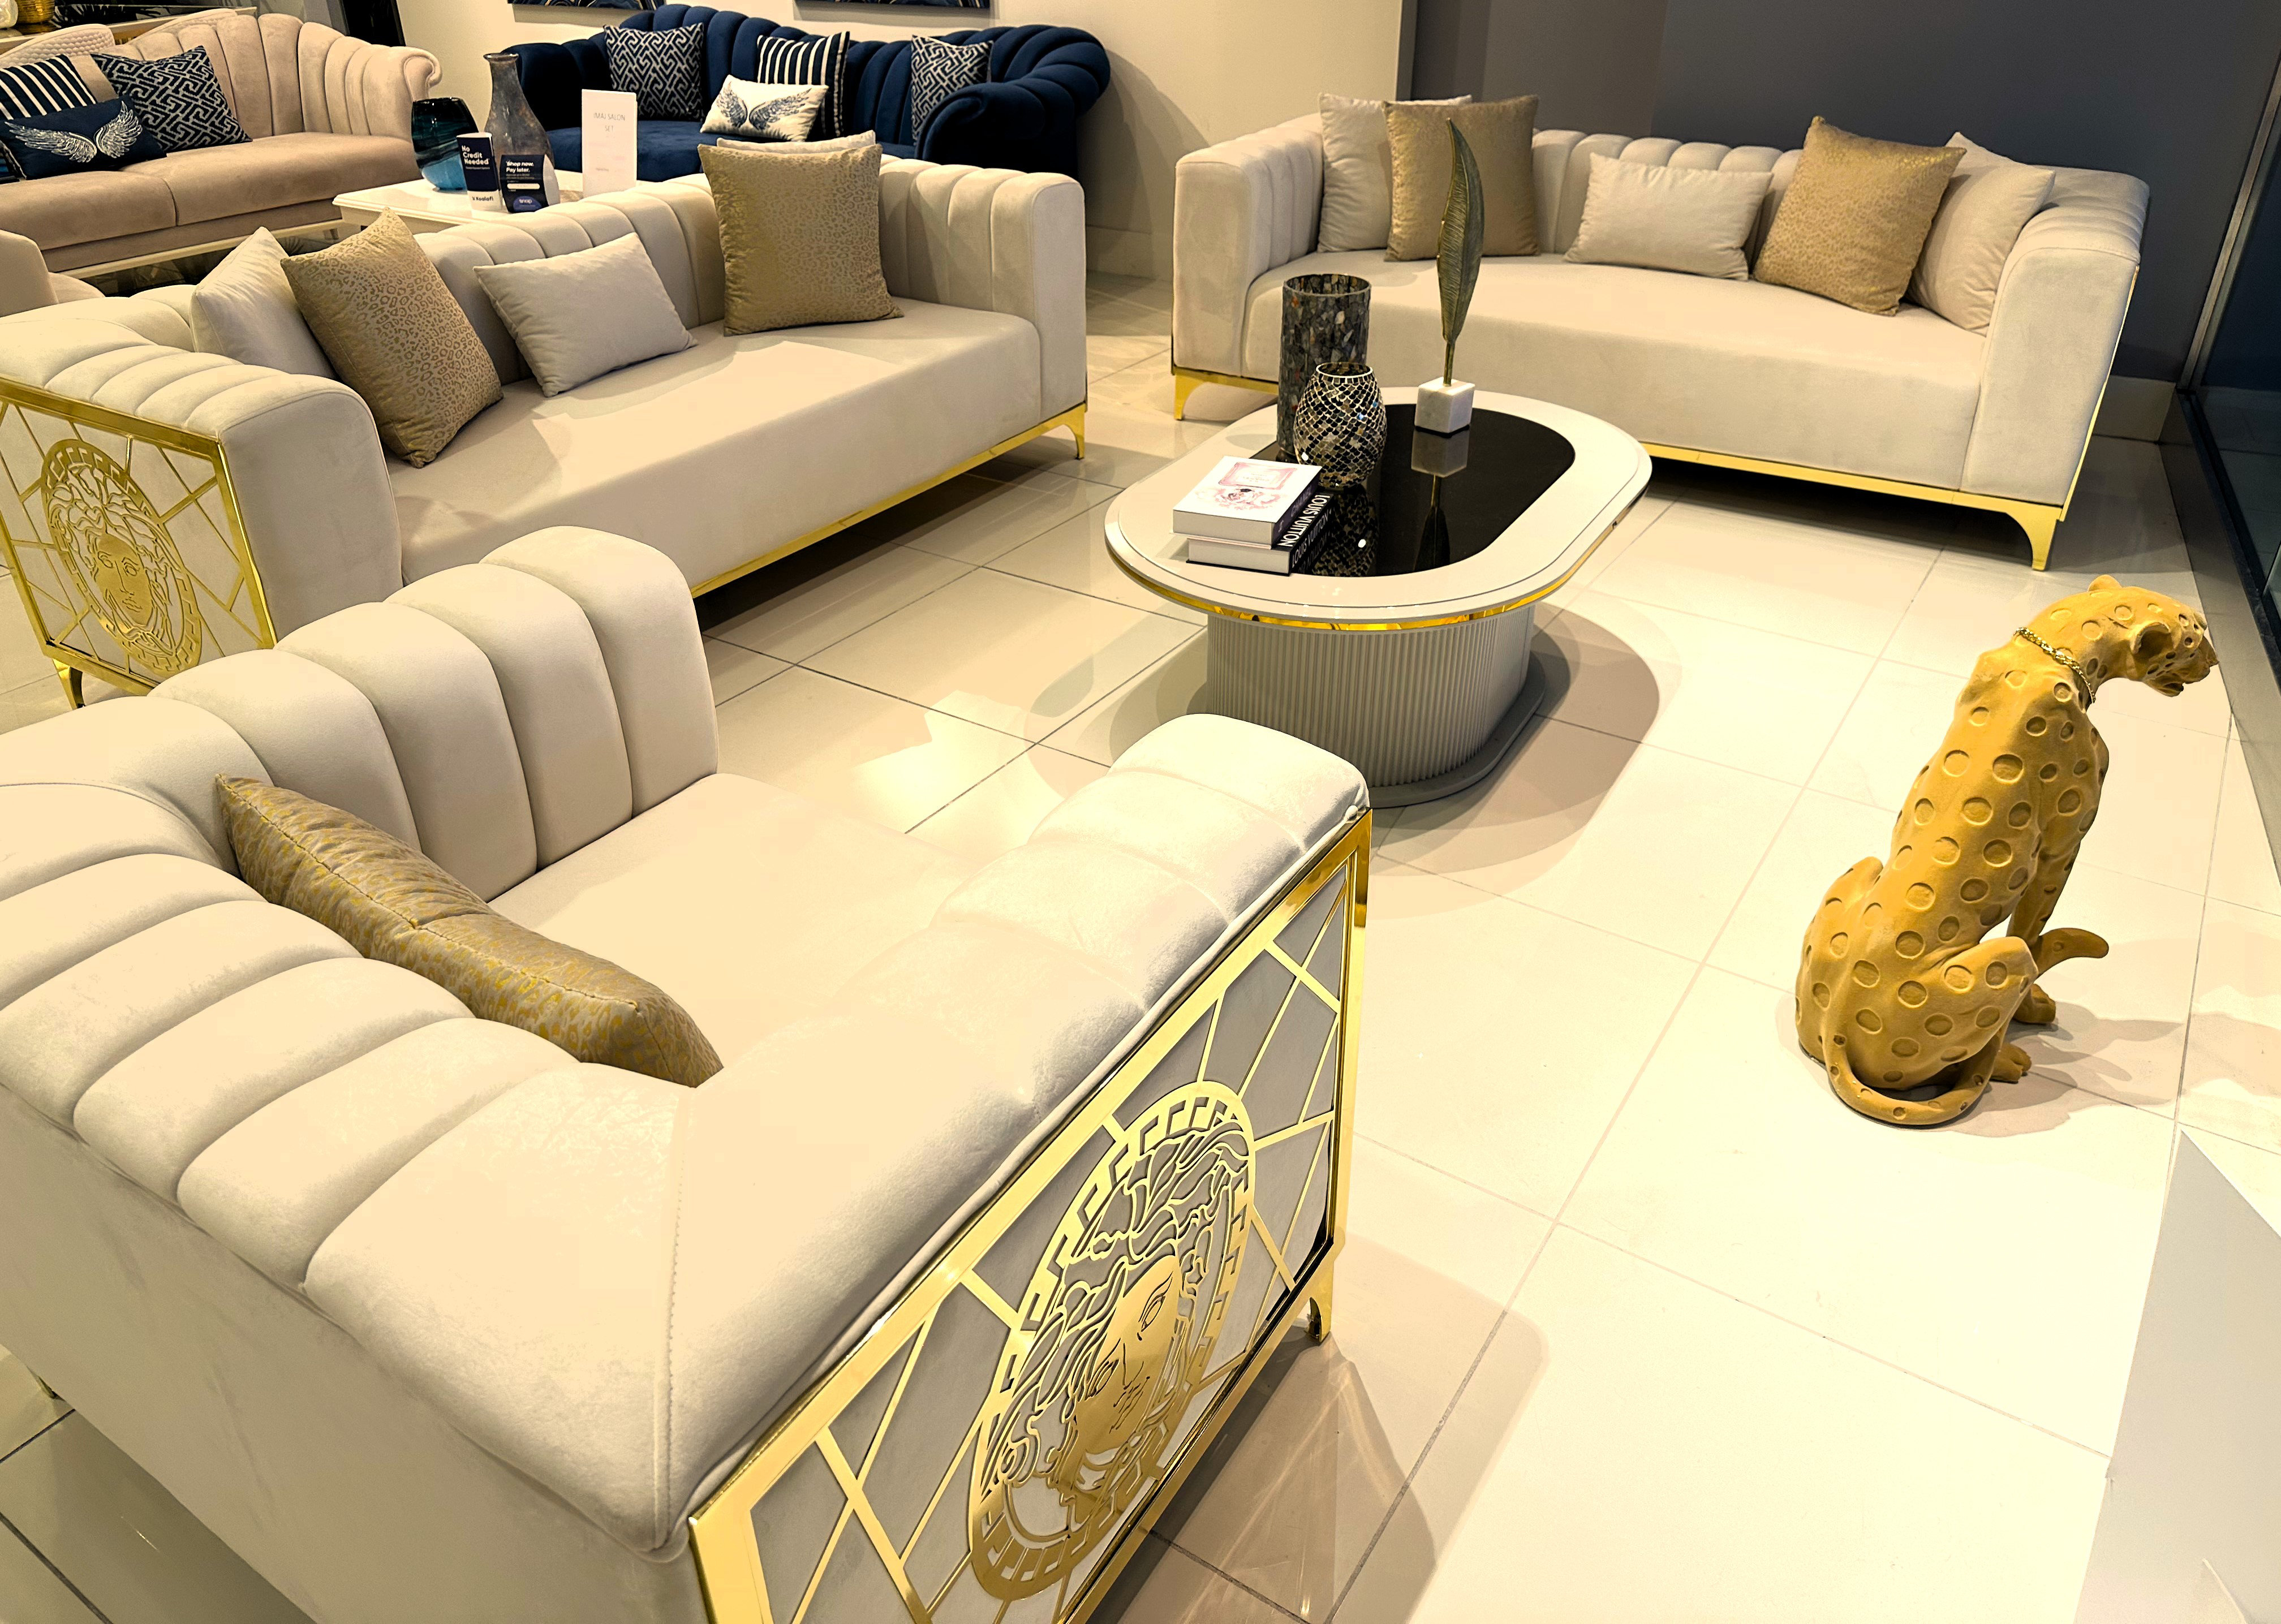 ArtCore Furniture 3 - Piece Living Room Set